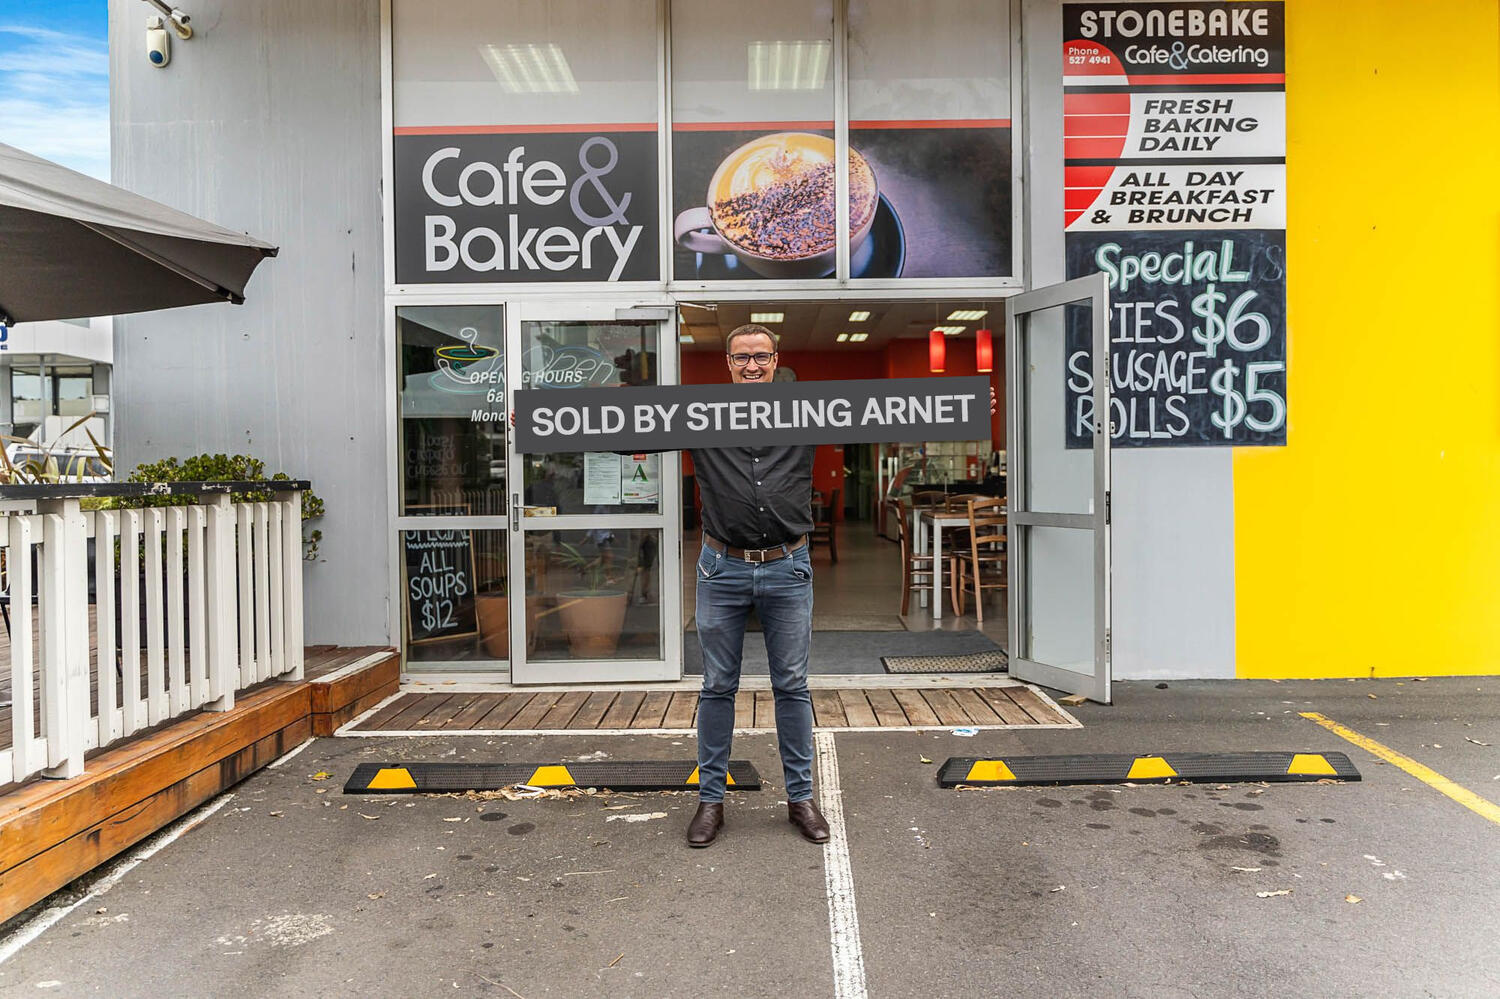 Stonebake Cafe Sold by Sterling Arnet at KAKAPO Business Sales